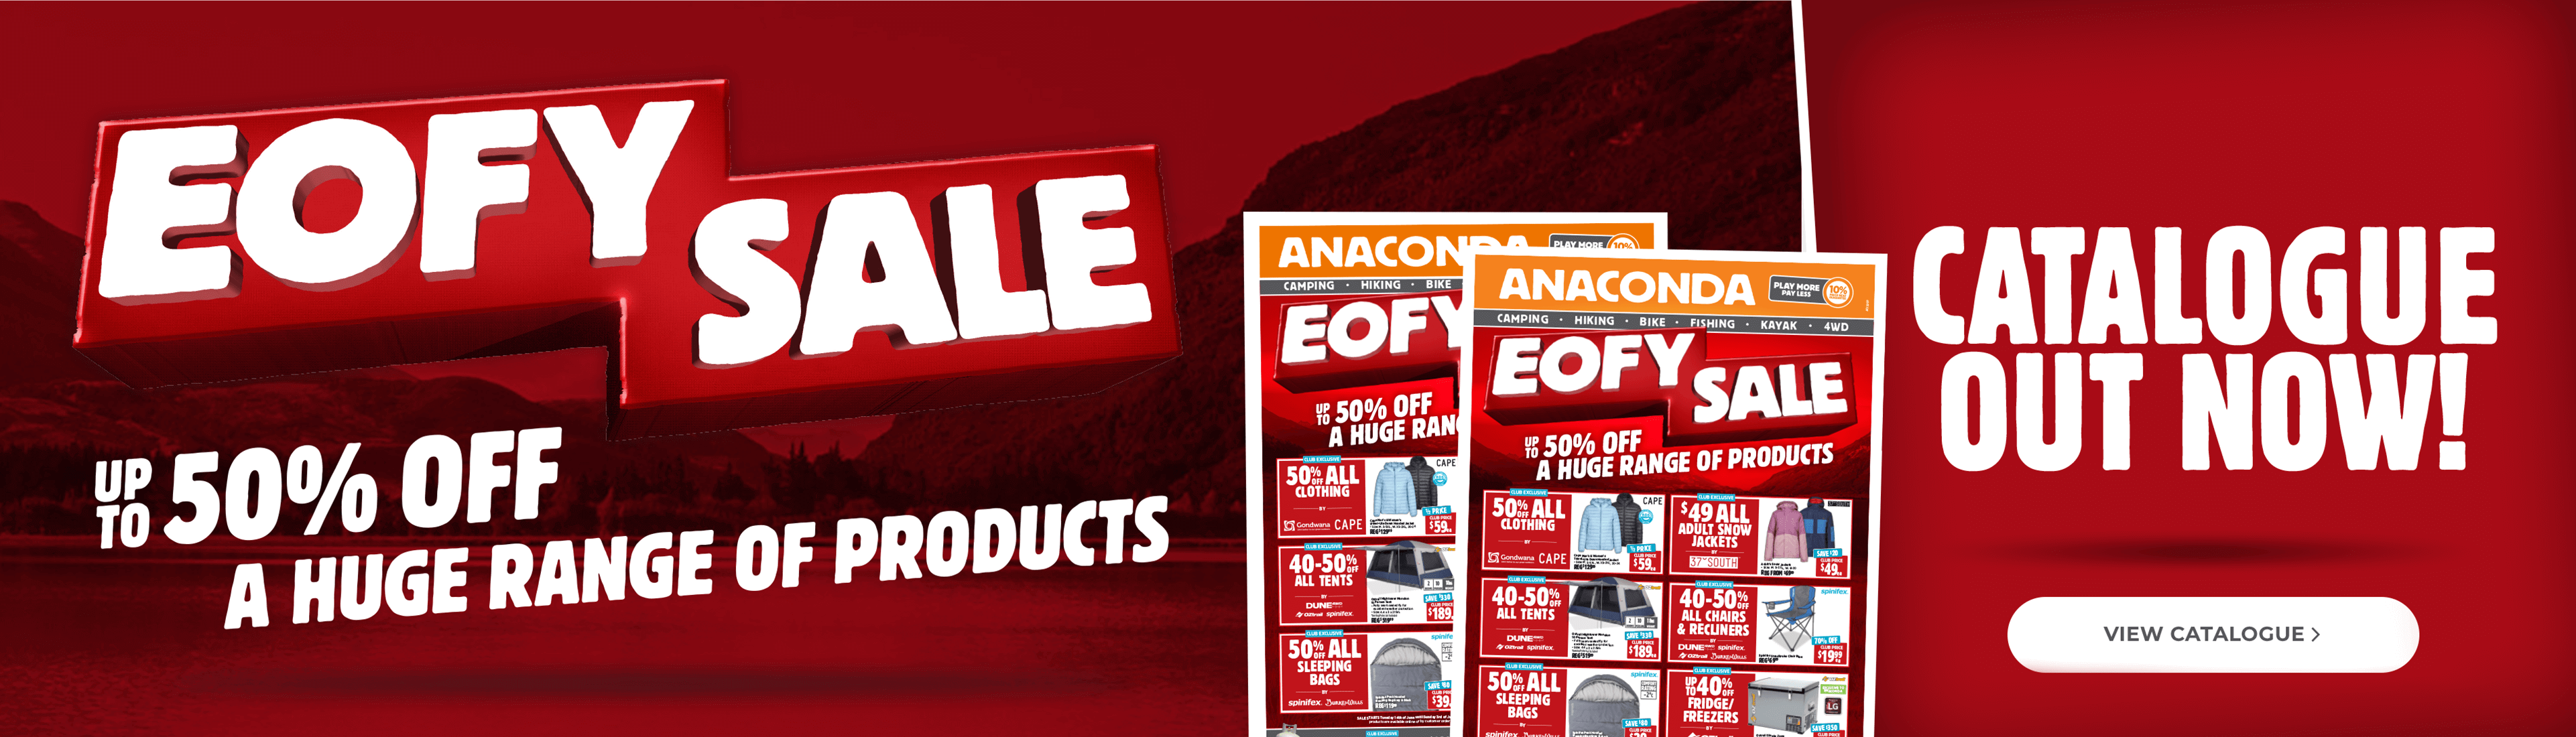 Anaconda EOFY sale Up to 50% OFF huge range of products